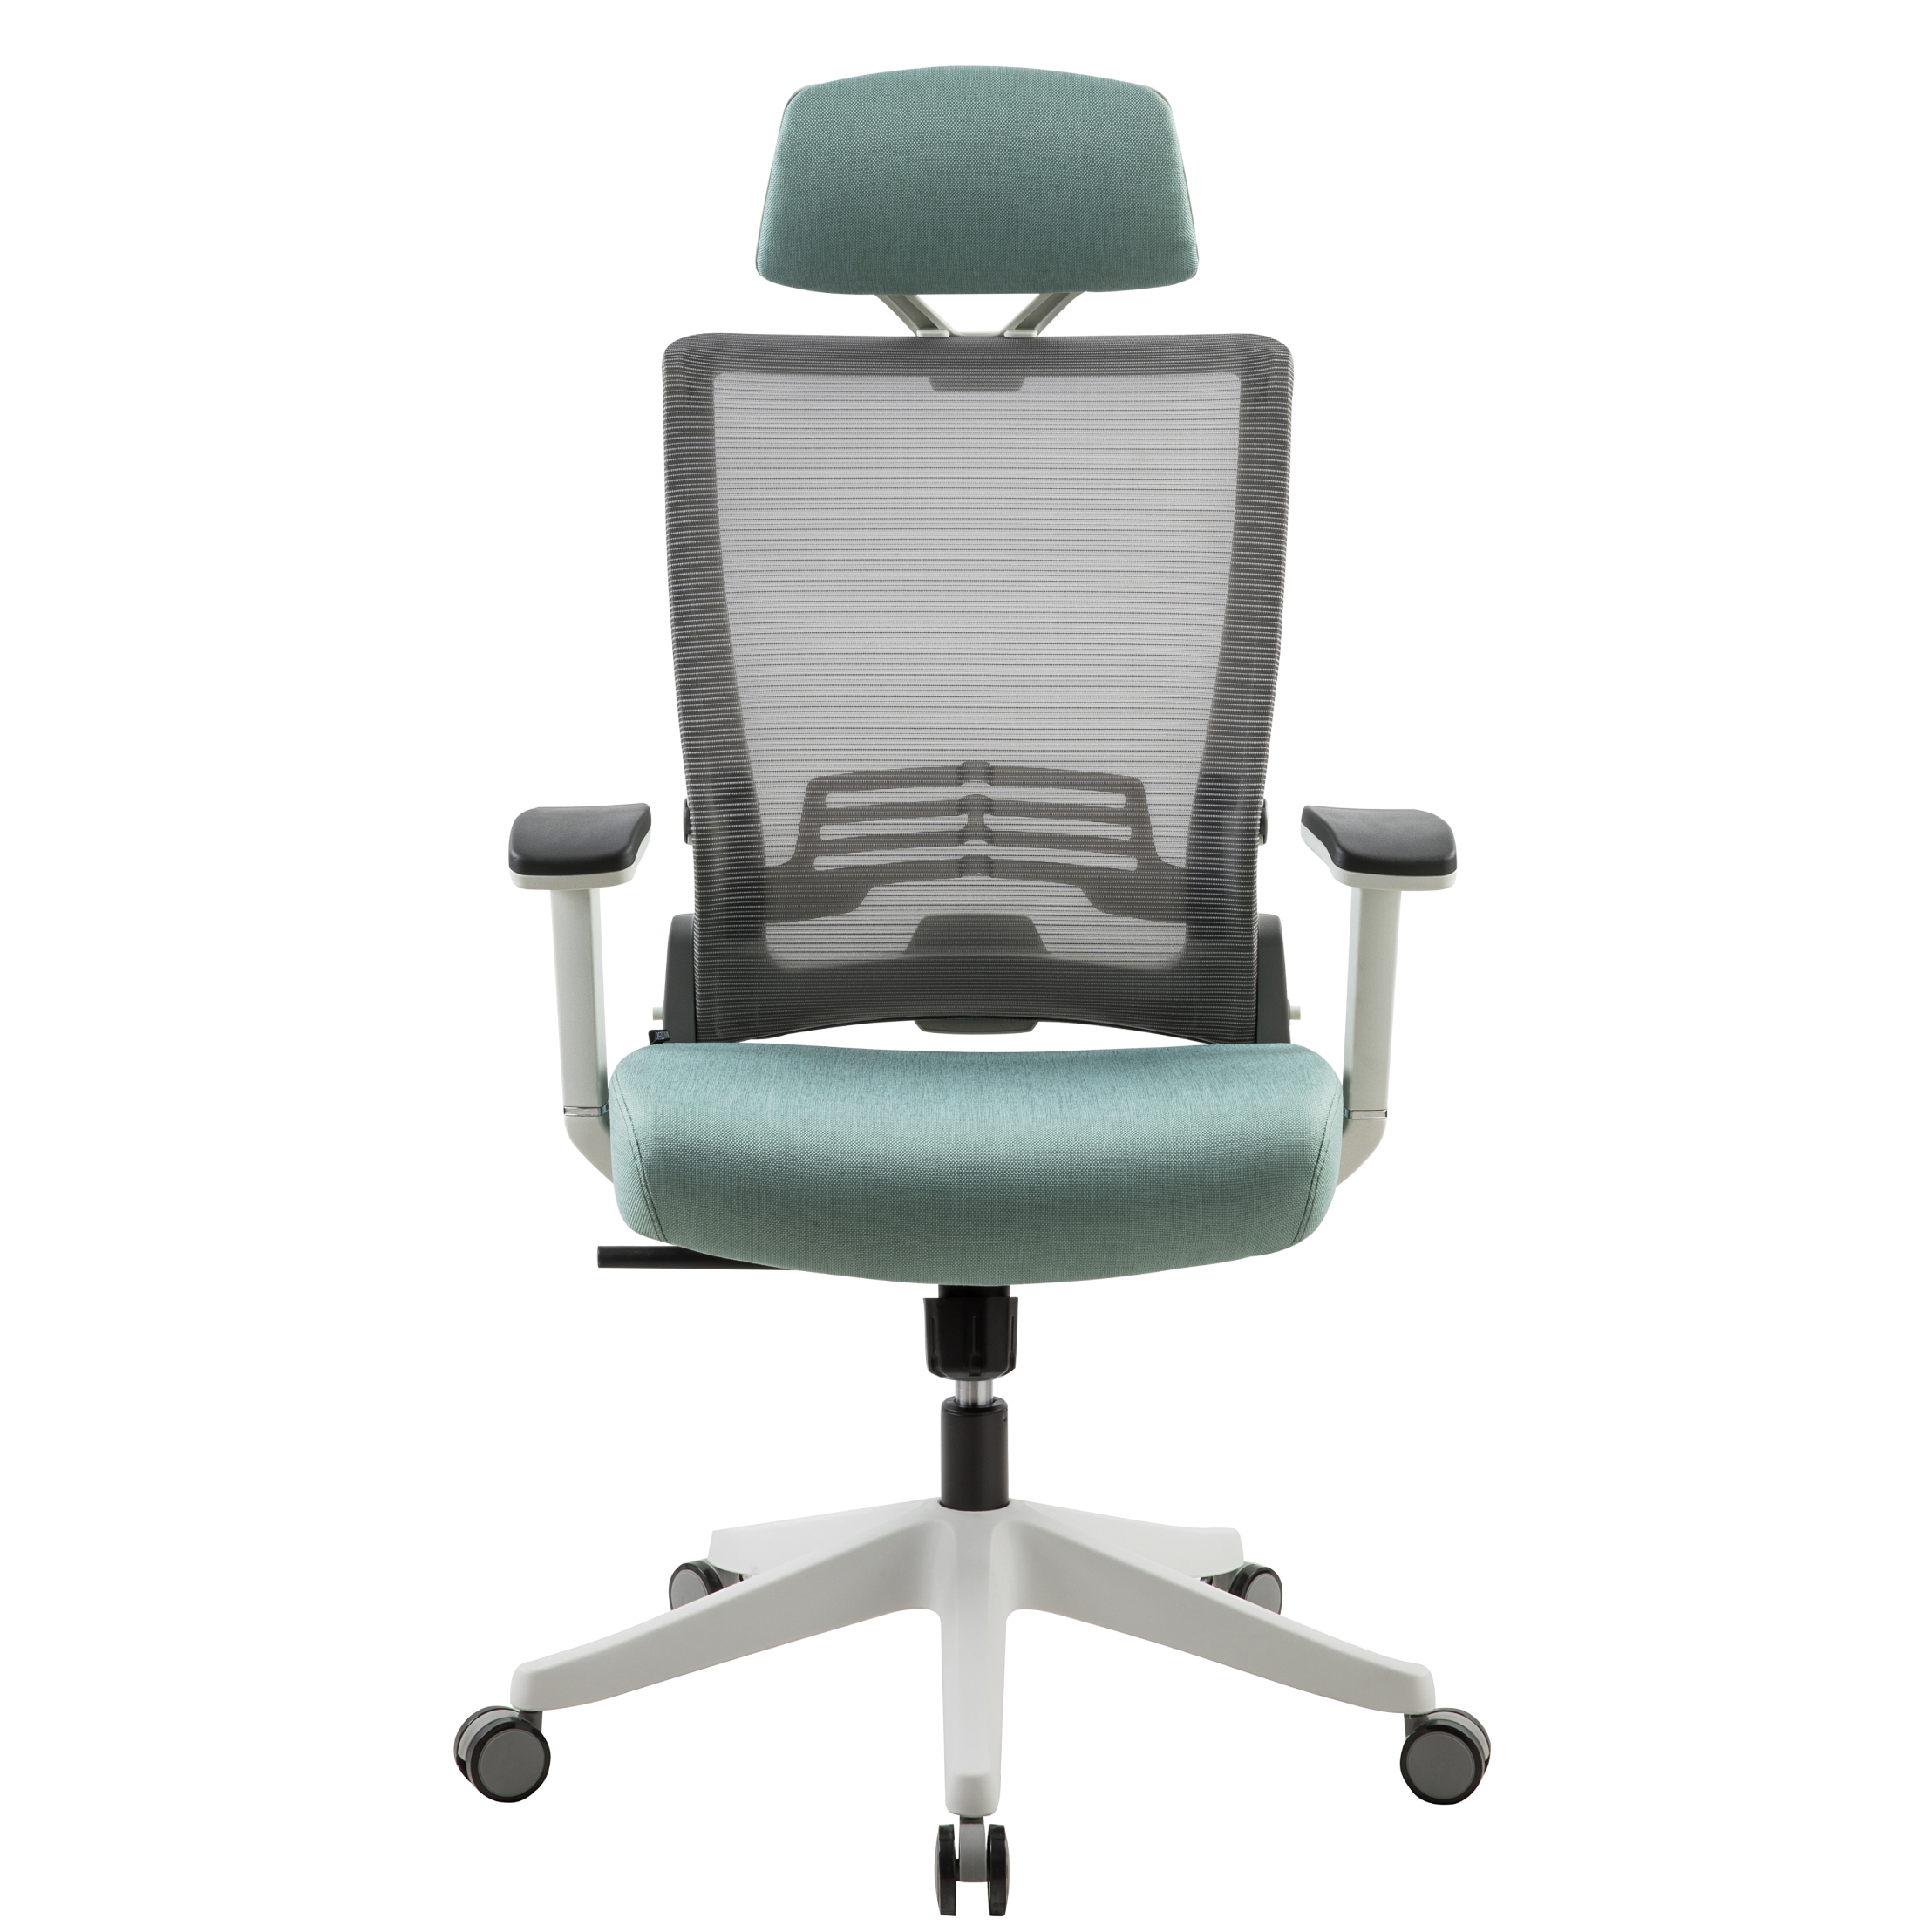 KIKO-Beige-KIKO Chair, Ergonomic Folding Design, Premium Office & Computer Chair by Navoergonomic